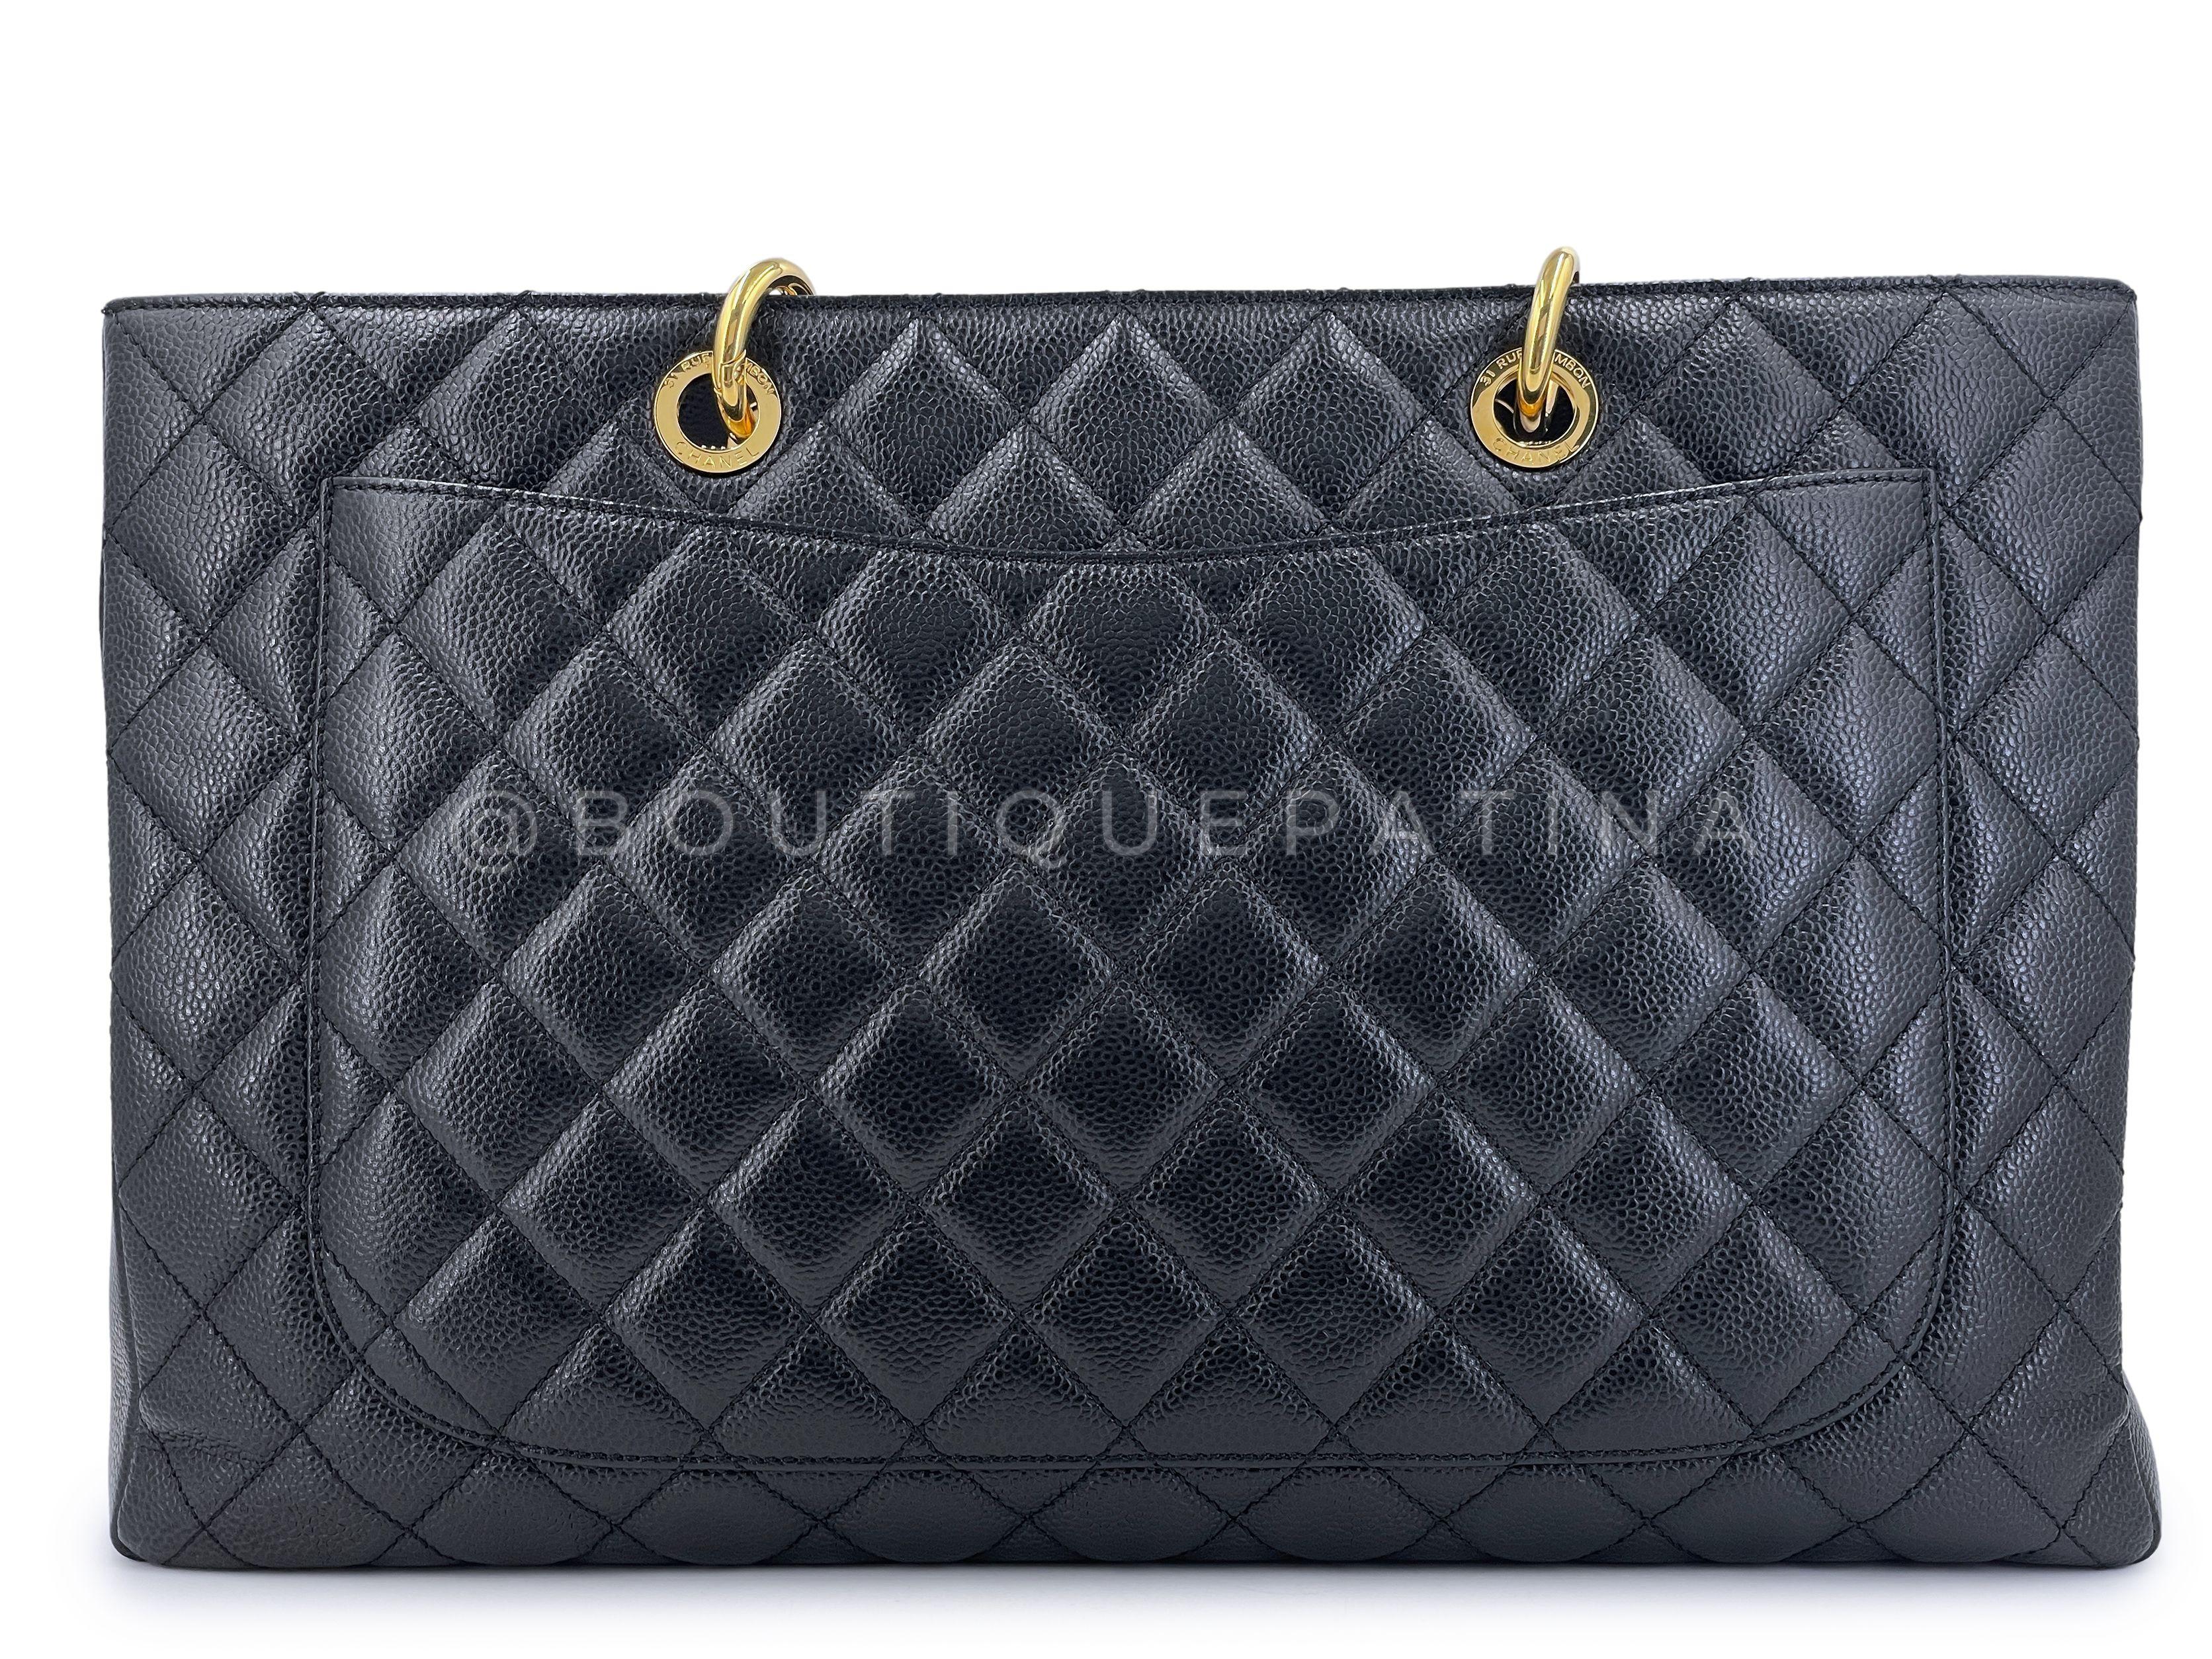 Chanel Black Caviar XL GST Grand Shopper Tote Bag GHW 67159 For Sale 1